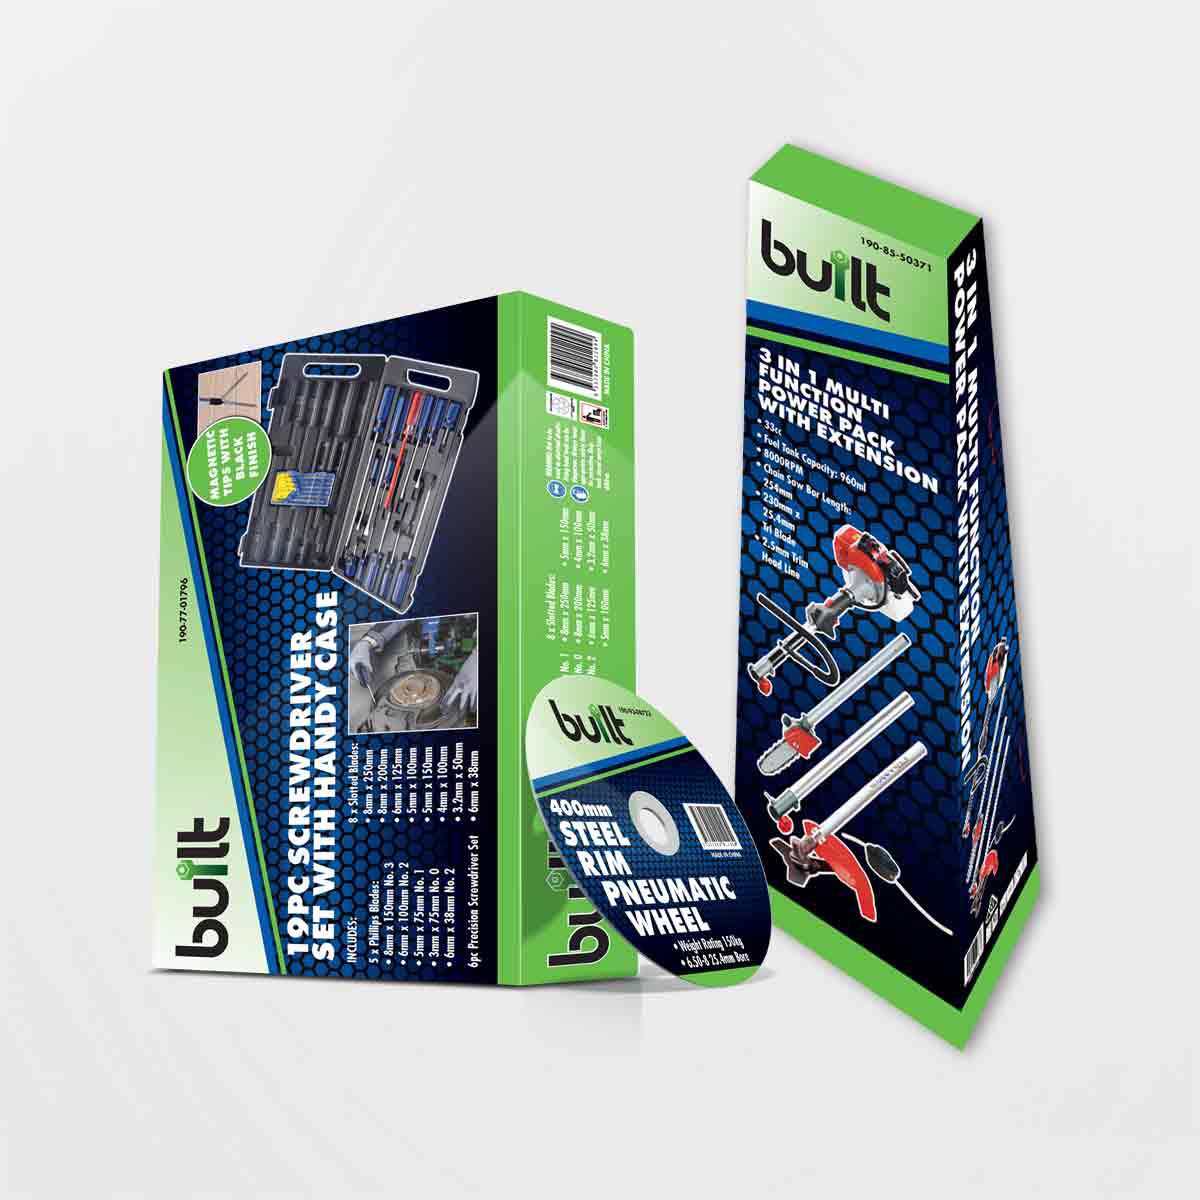 Packaging designs for Built brand designed by Linda Butler of GGA Graphics